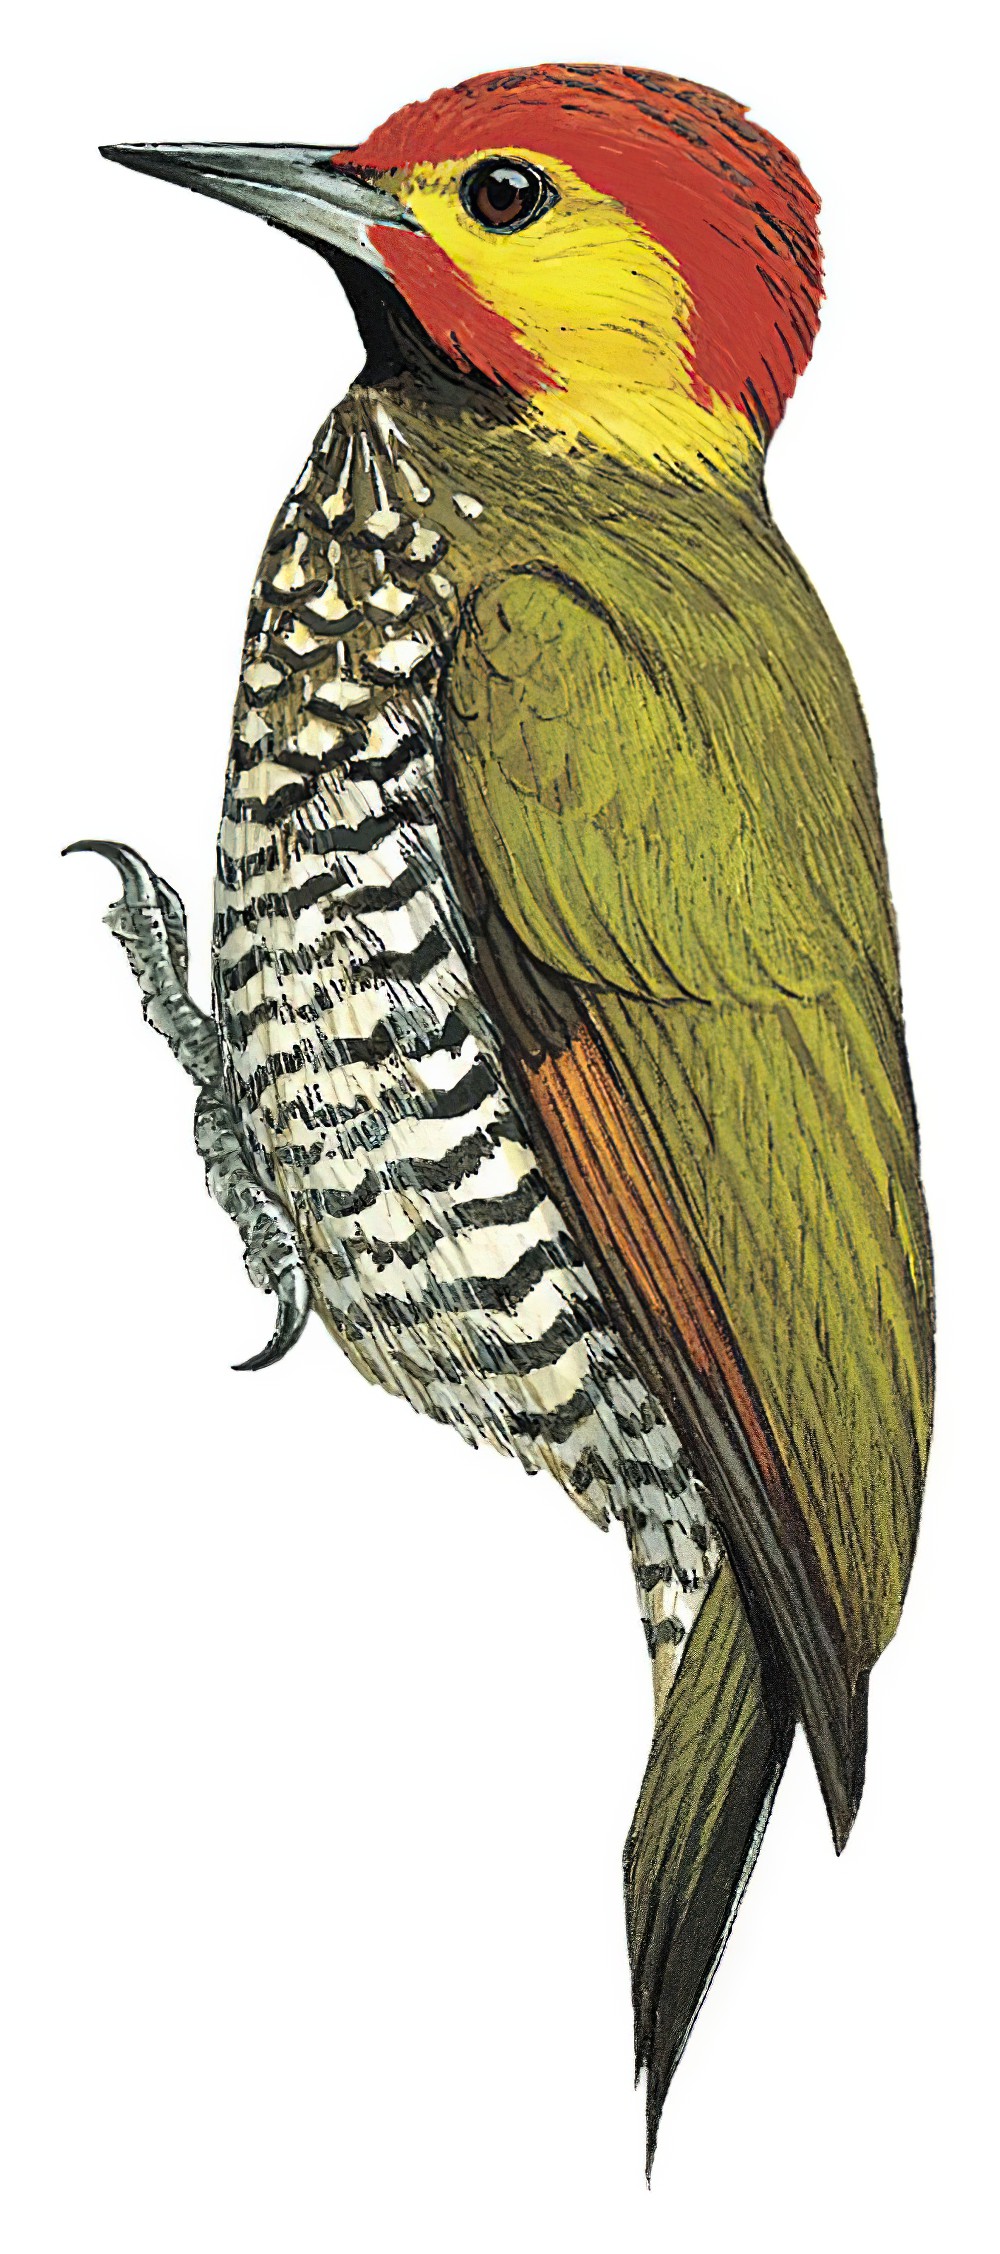 Lita Woodpecker / Piculus litae